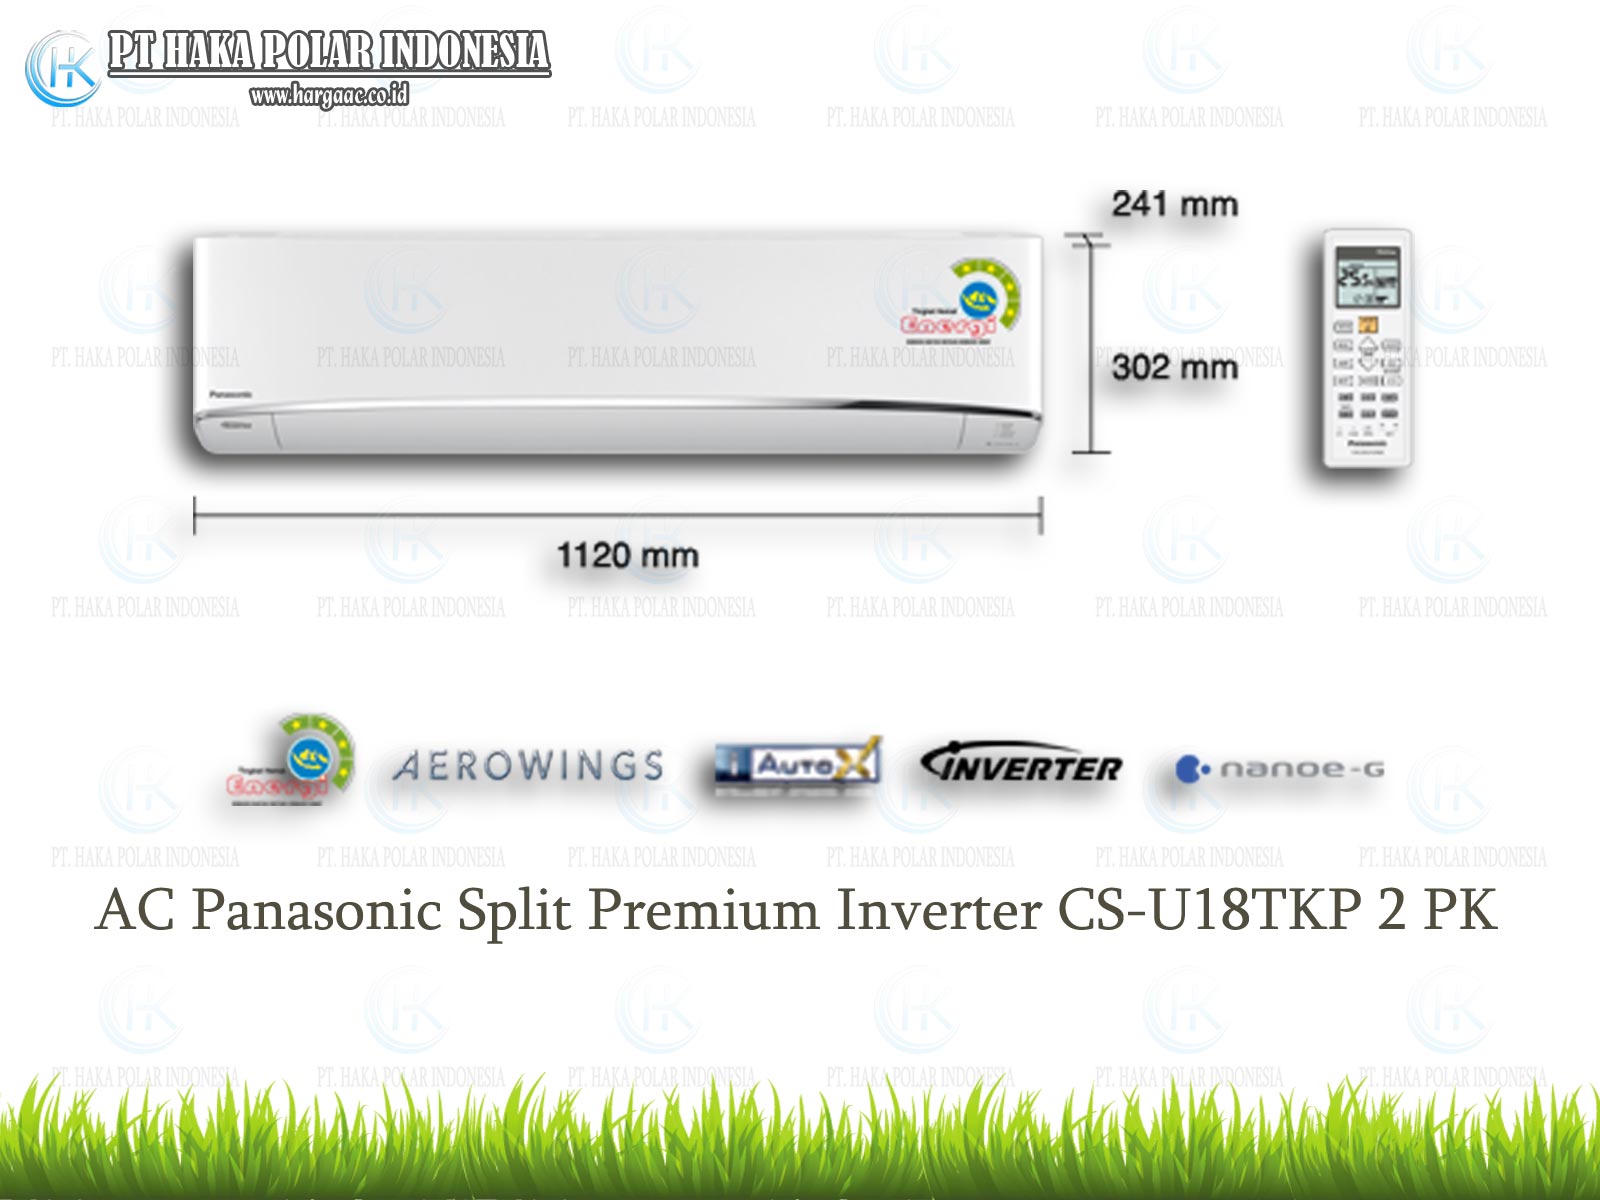 AC Panasonic Split Premium Inverter AERO Series CS-U18TKP 2 PK 